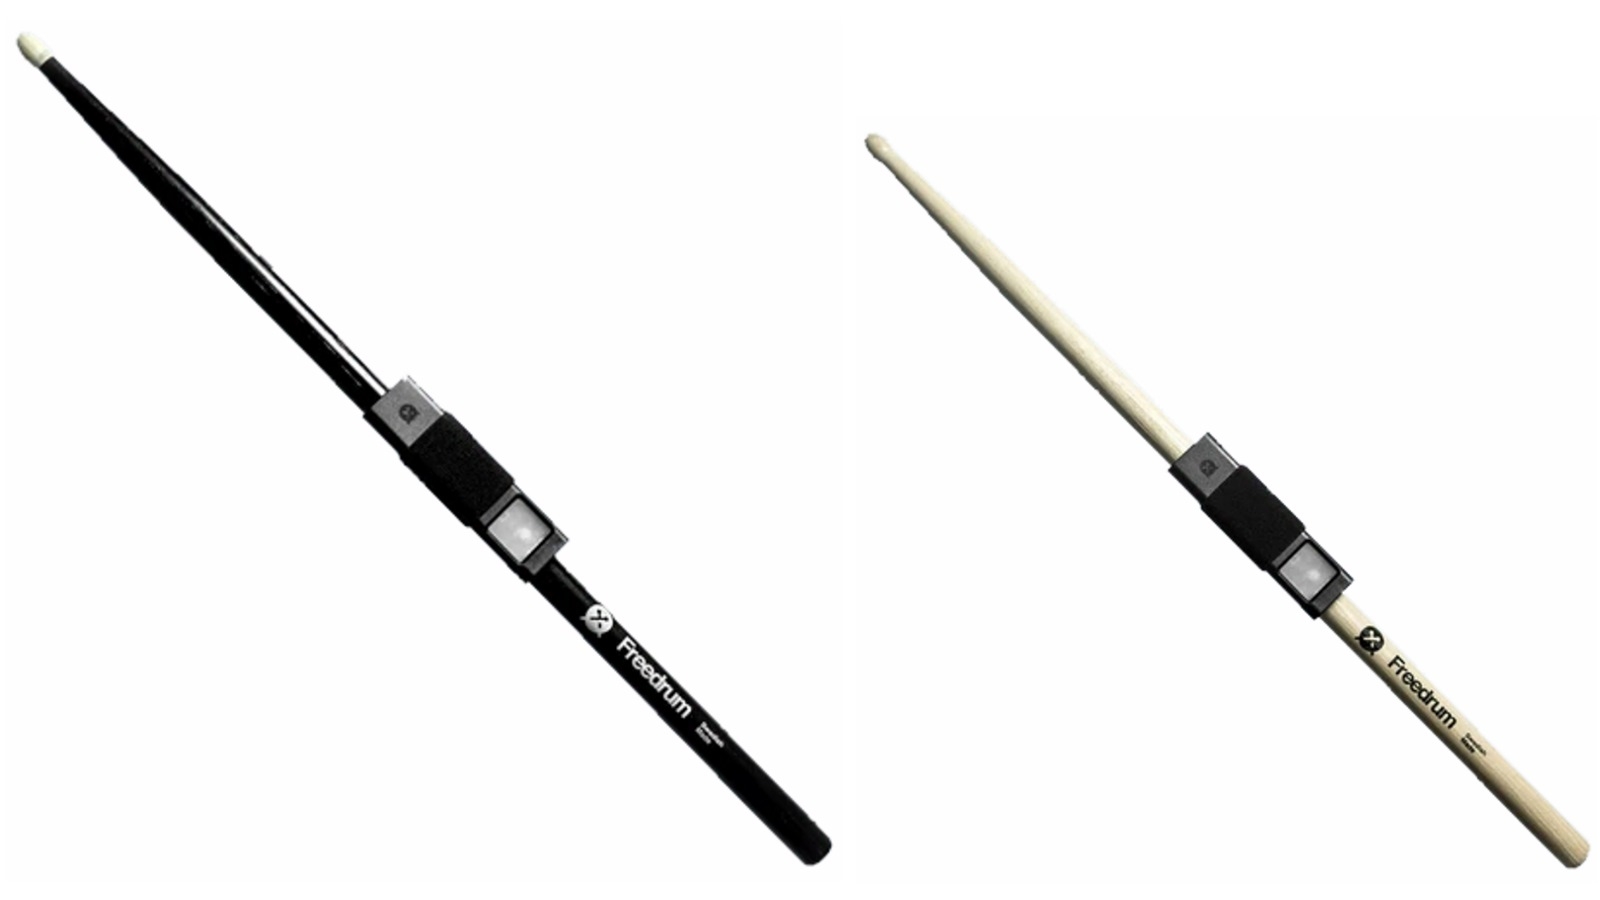 Freedrum Complete Kit - 4 Sensors + Drumsticks